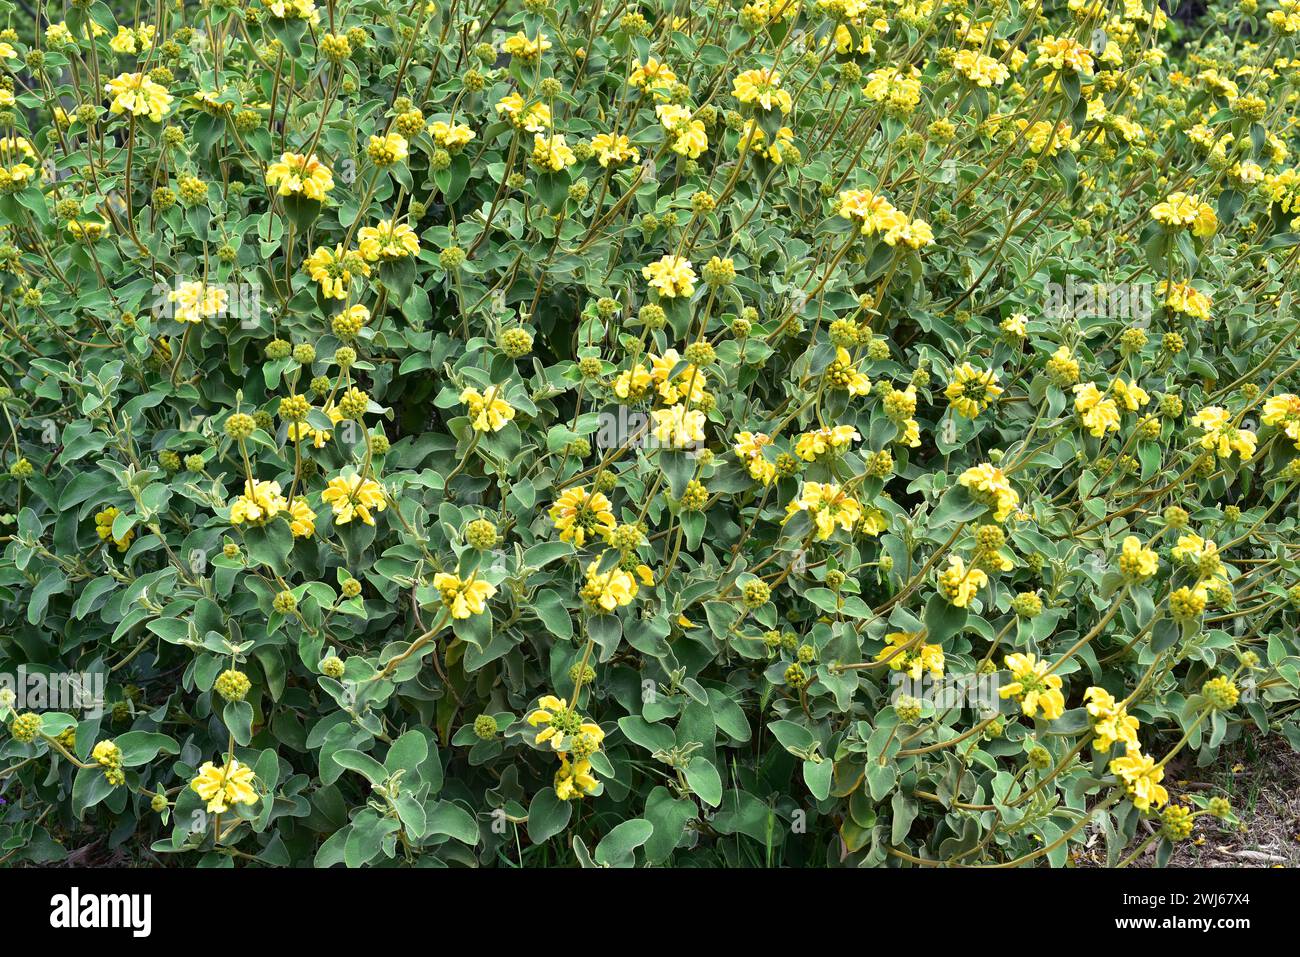 Golden-leaved Jerusalem sage (Phlomis chrysophylla) is an evergreen shrub native to western Asia. Flowering plant. Stock Photo